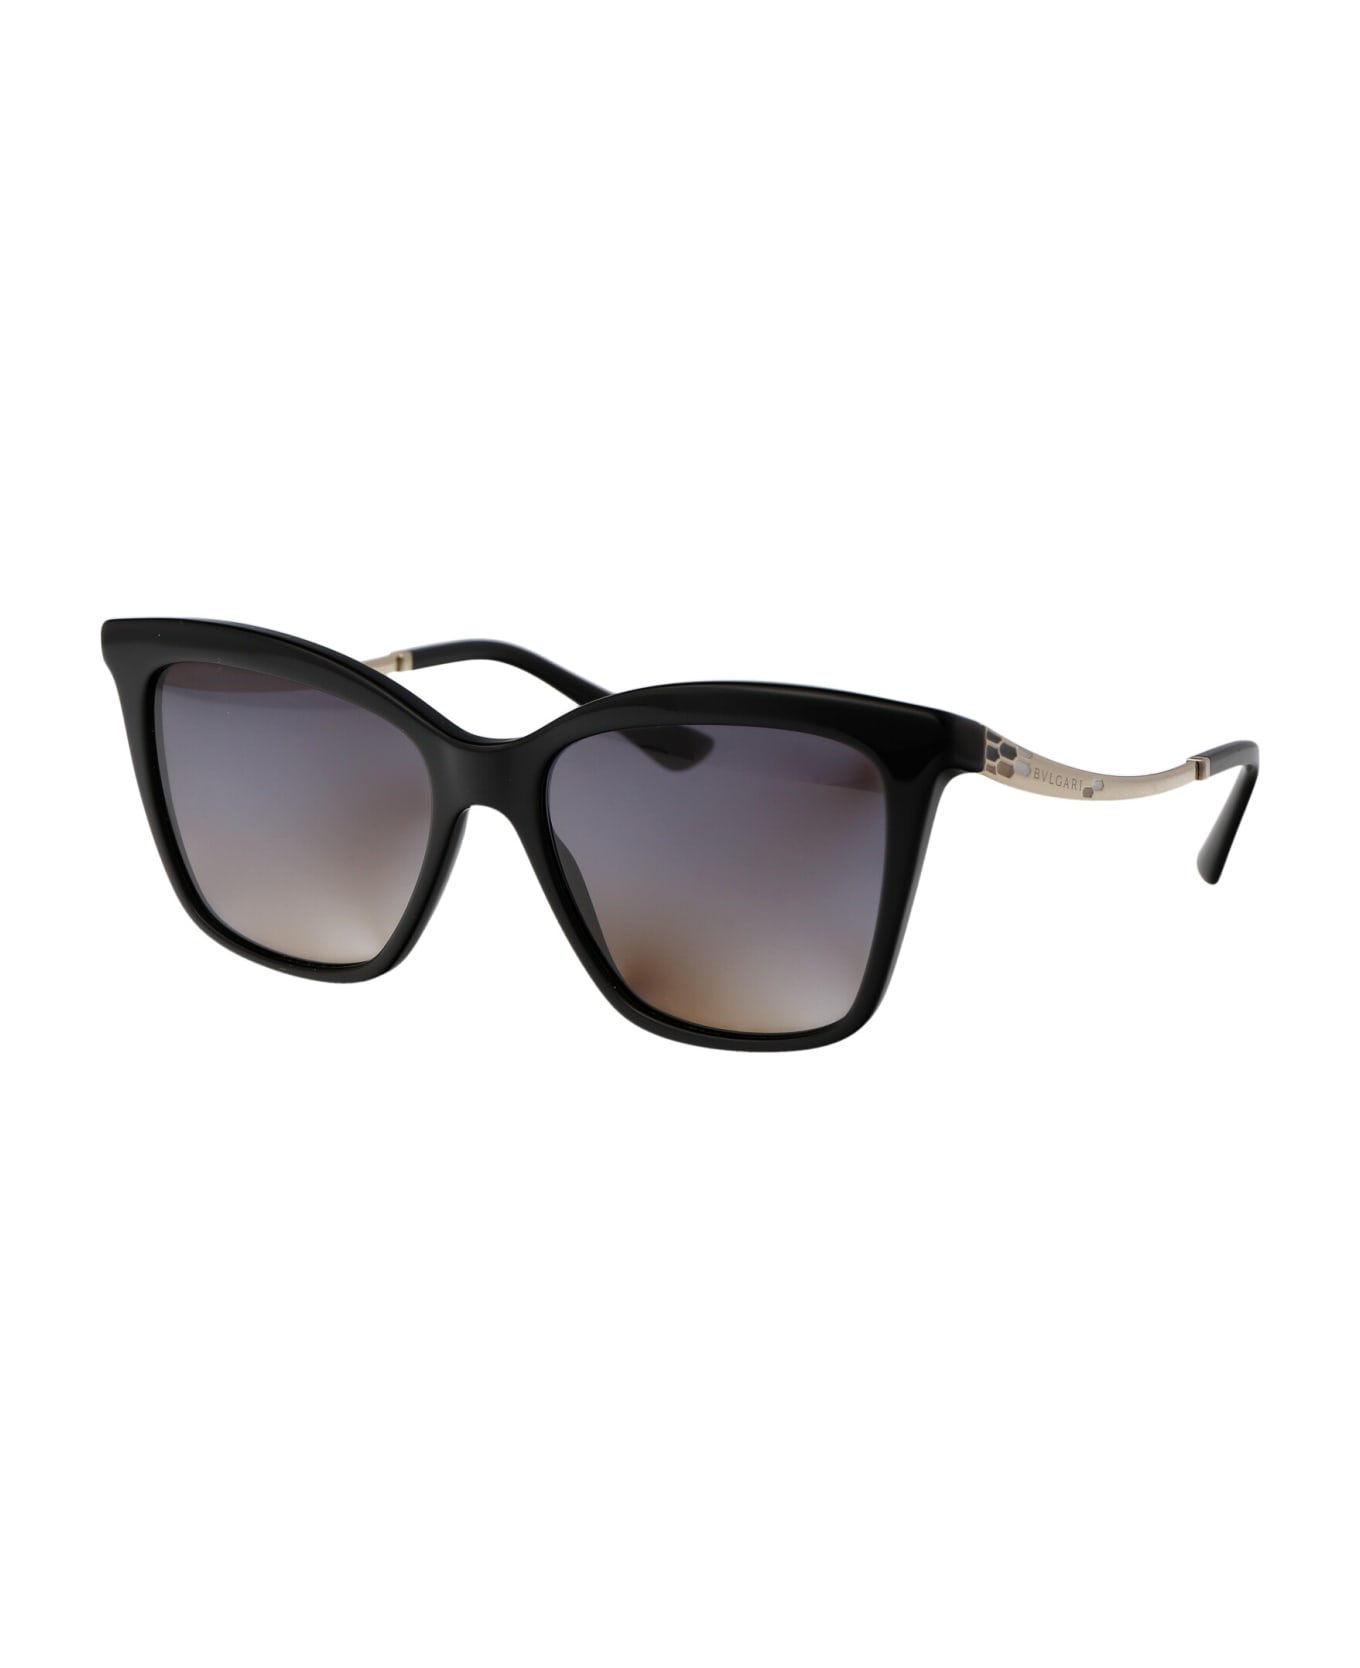 Bulgari 0bv8257 Sunglasses - 501/T3 BLACK